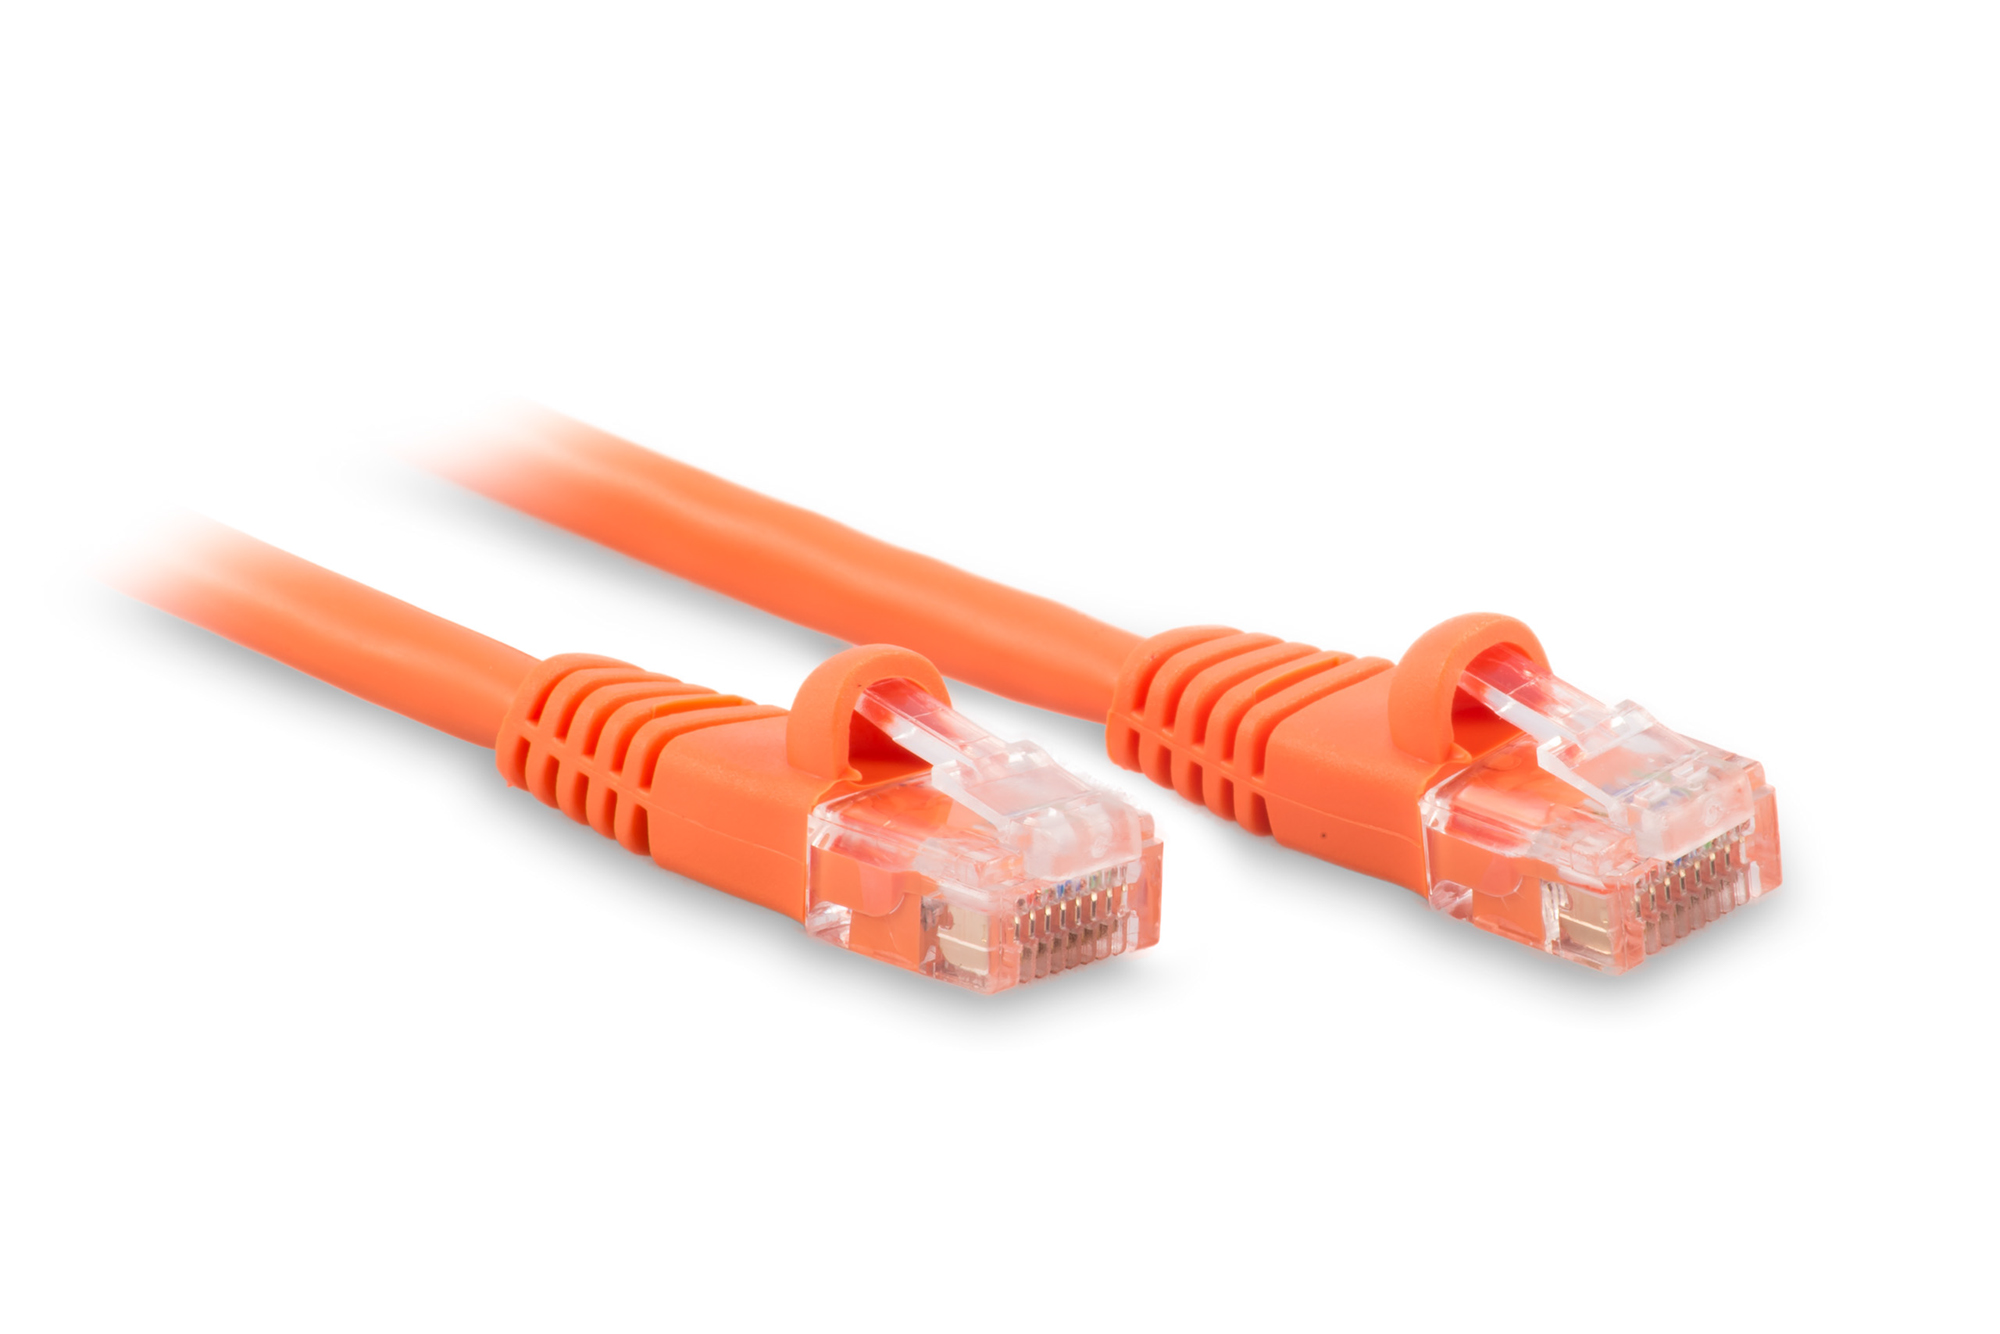 5ft Cat6 Ethernet Patch Cable - Orange Color - Snagless Boot, Stranded, RJ45, 550Mhz, 24AWG